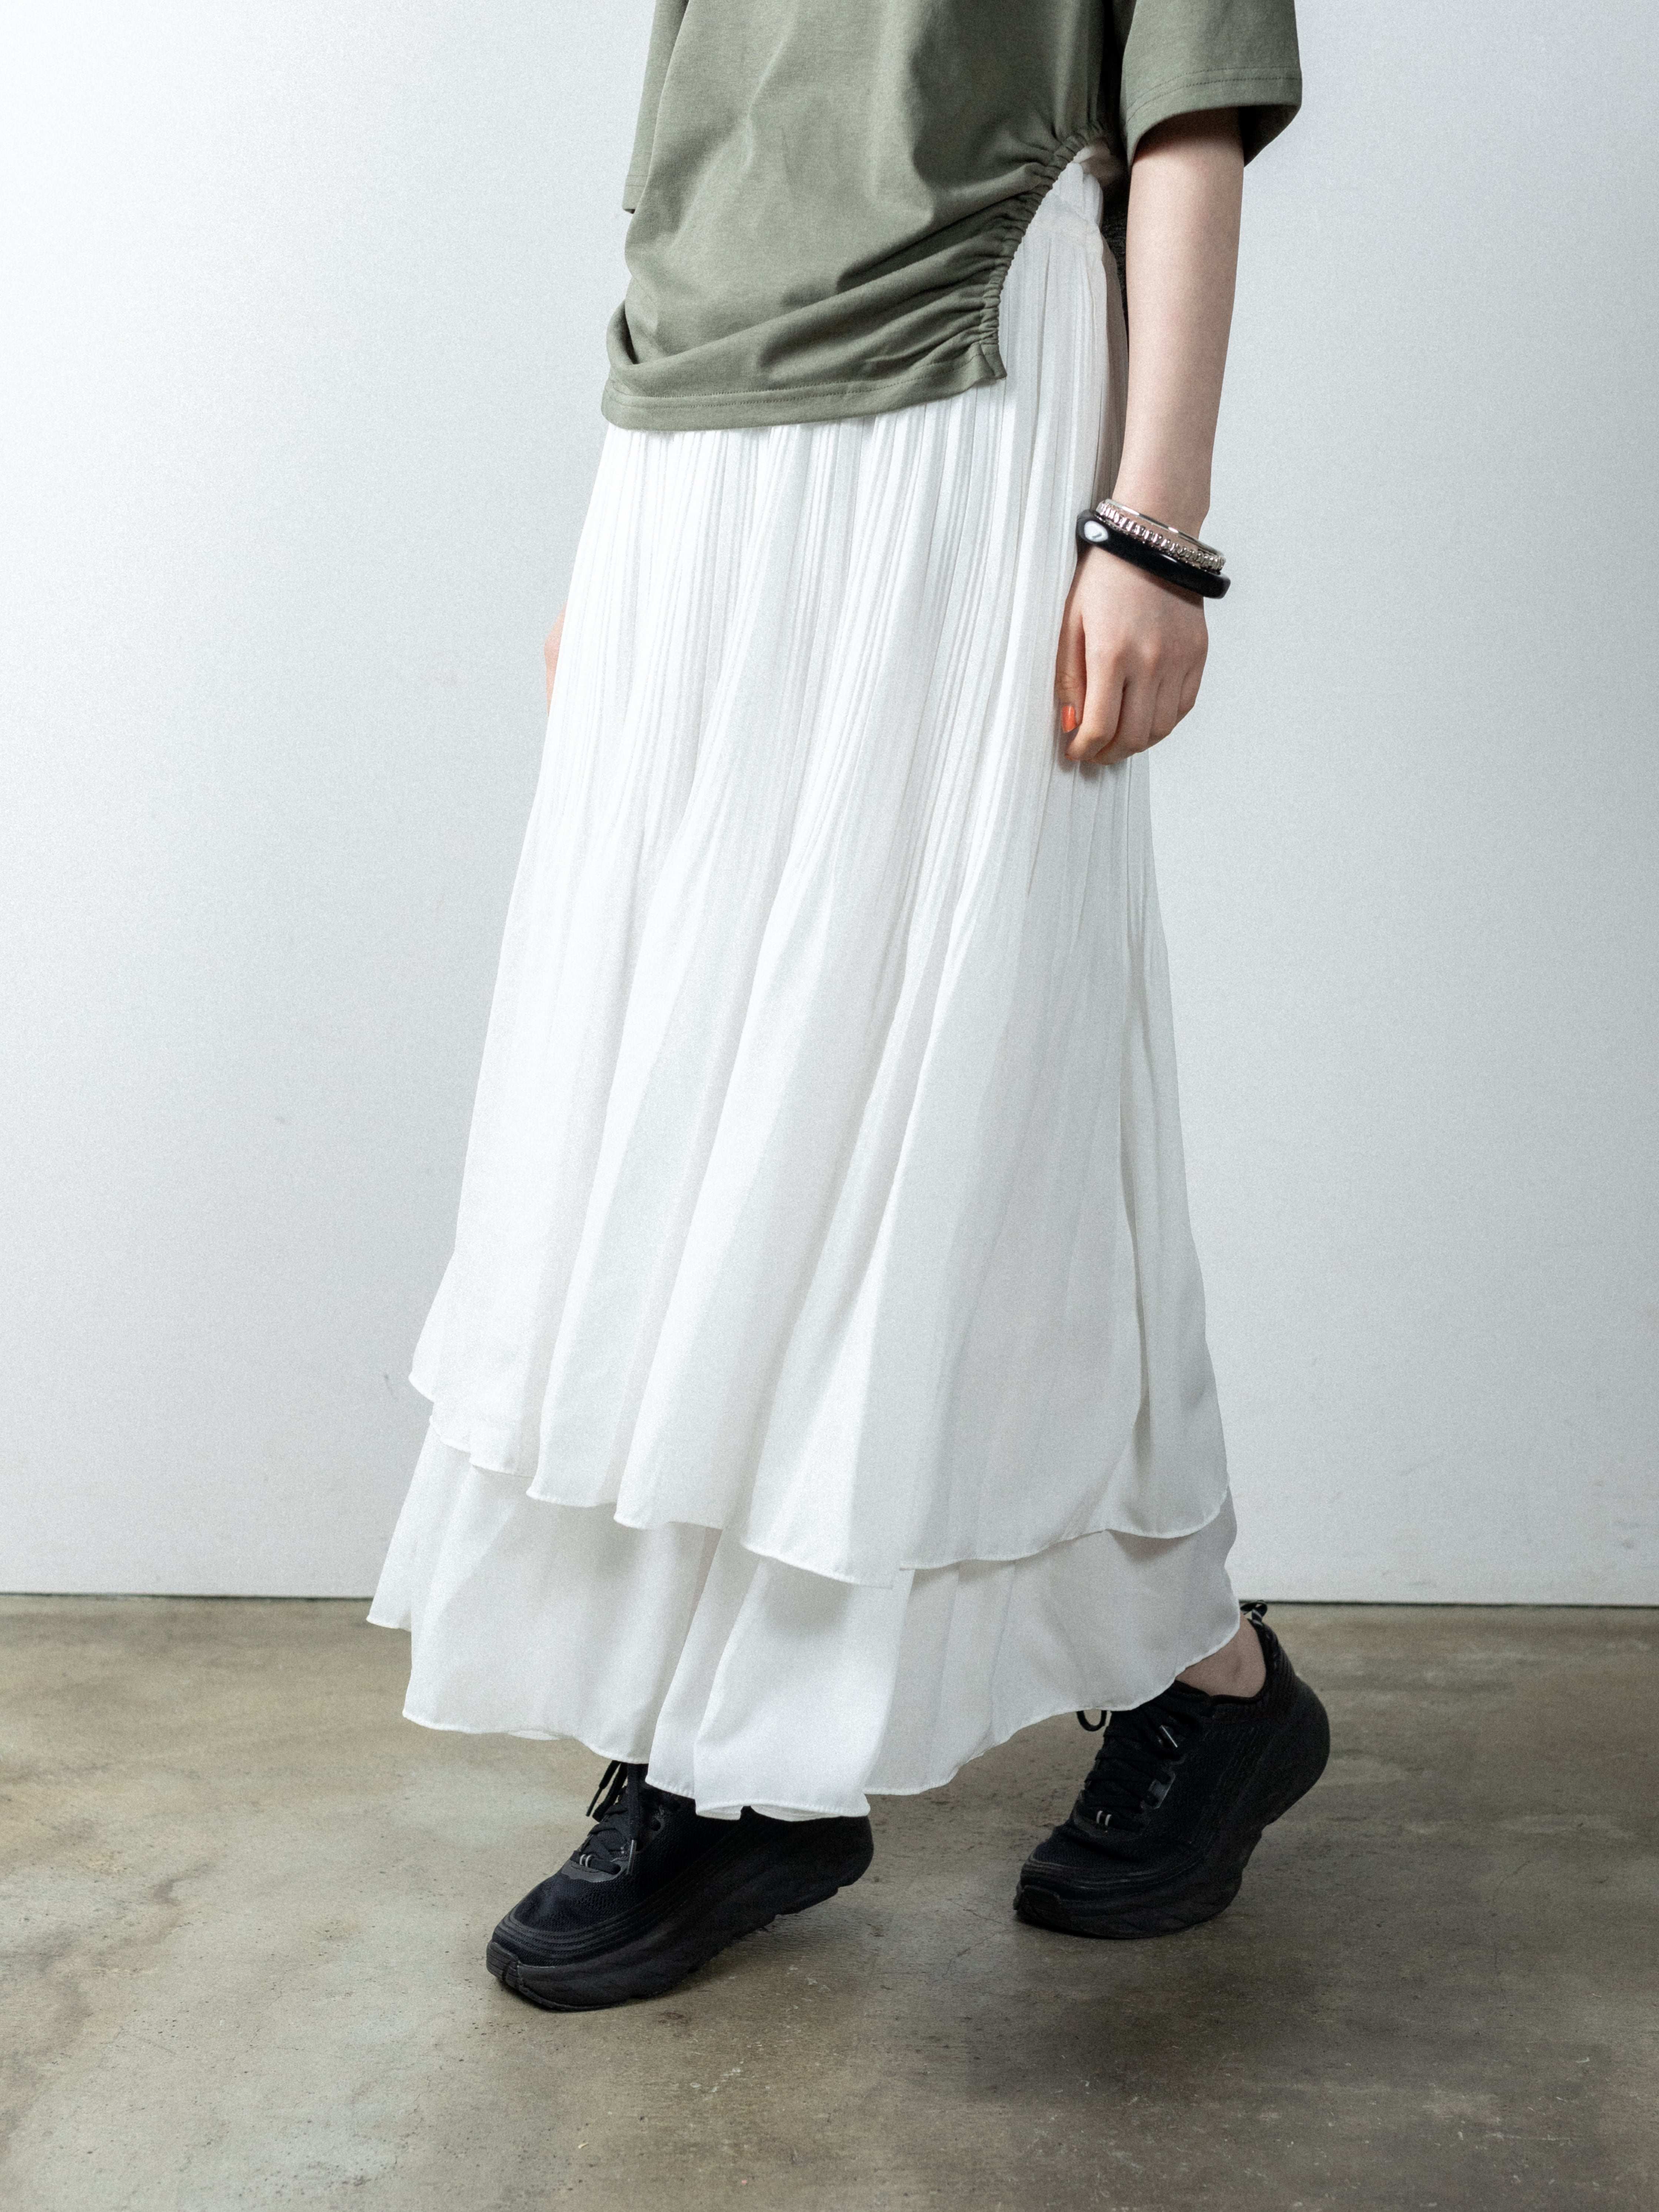 【AGAWD】楊柳スカート